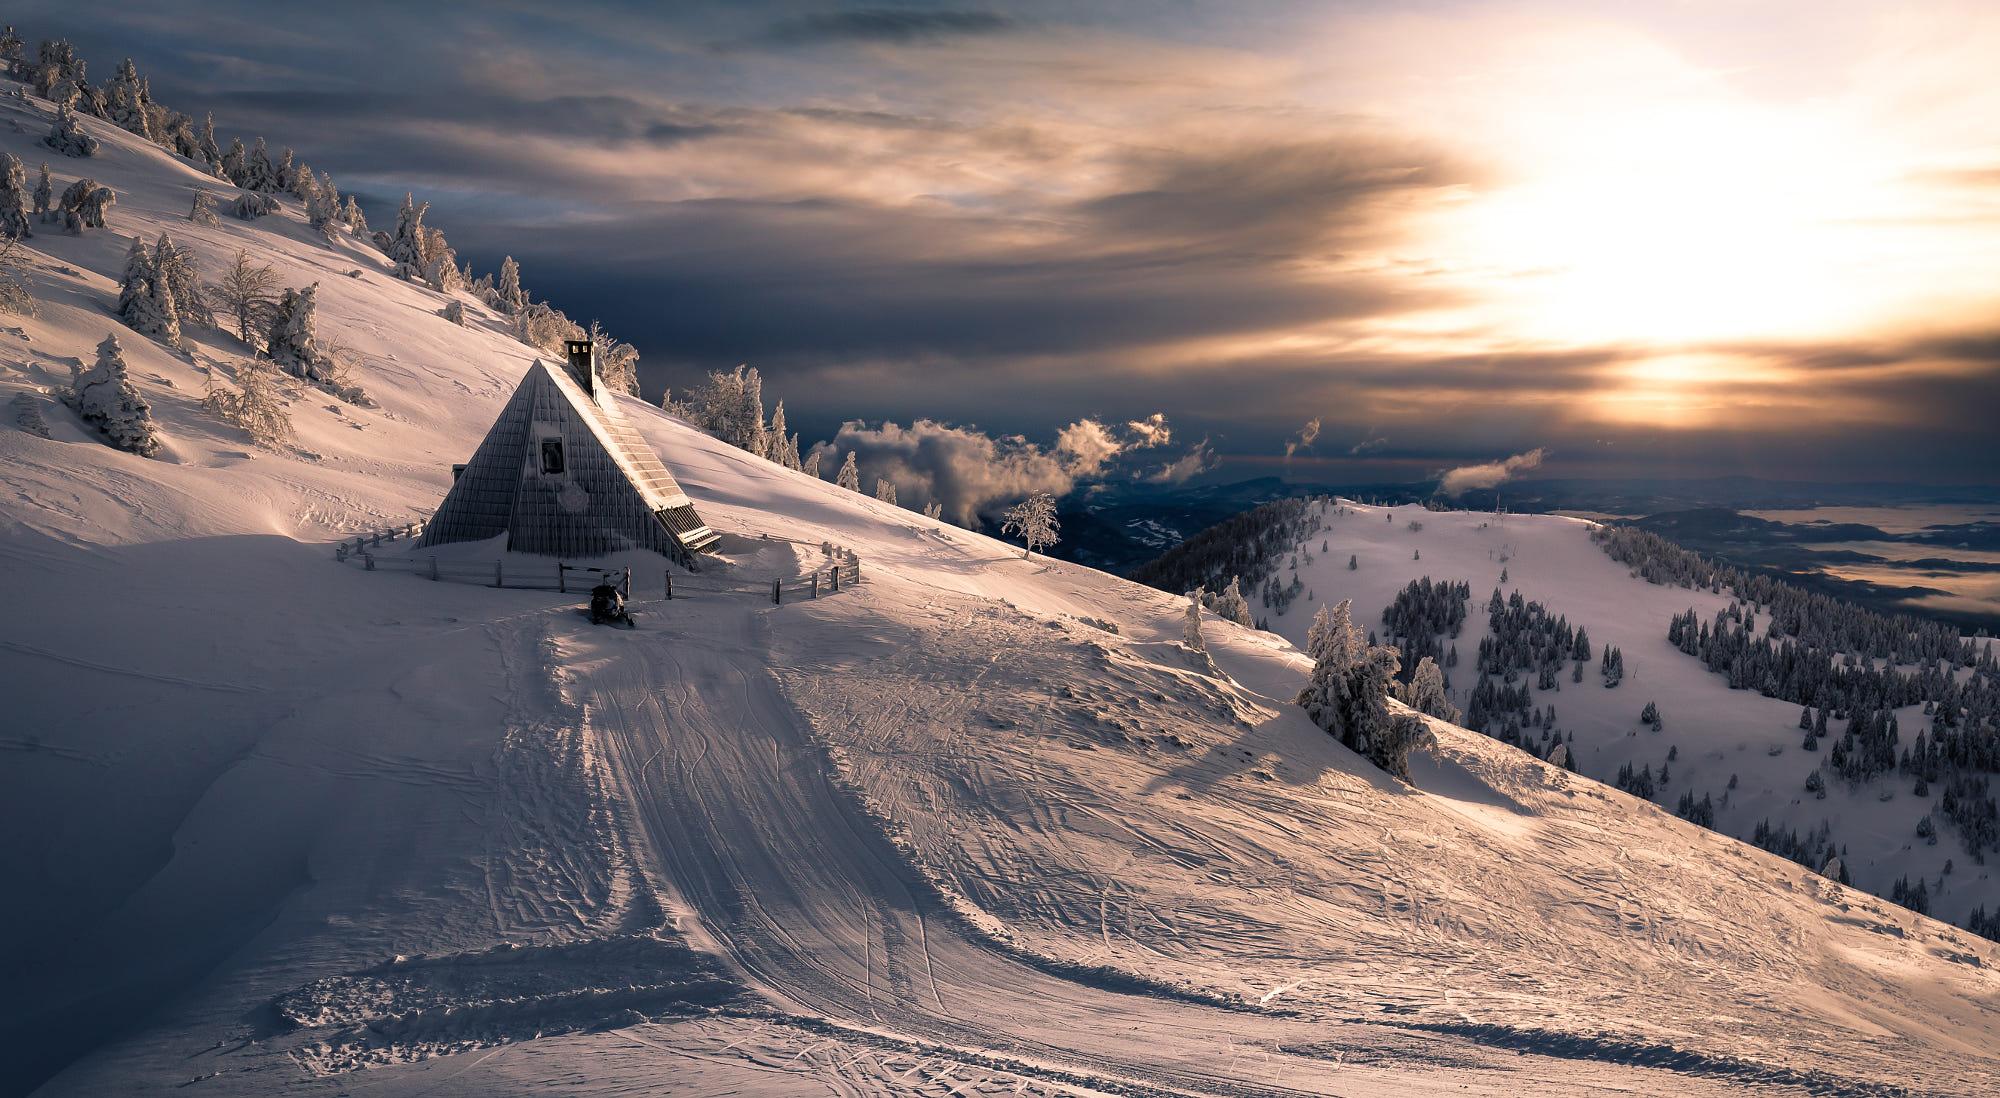 man made, cabin, mountain, pine tree, sunset, winter